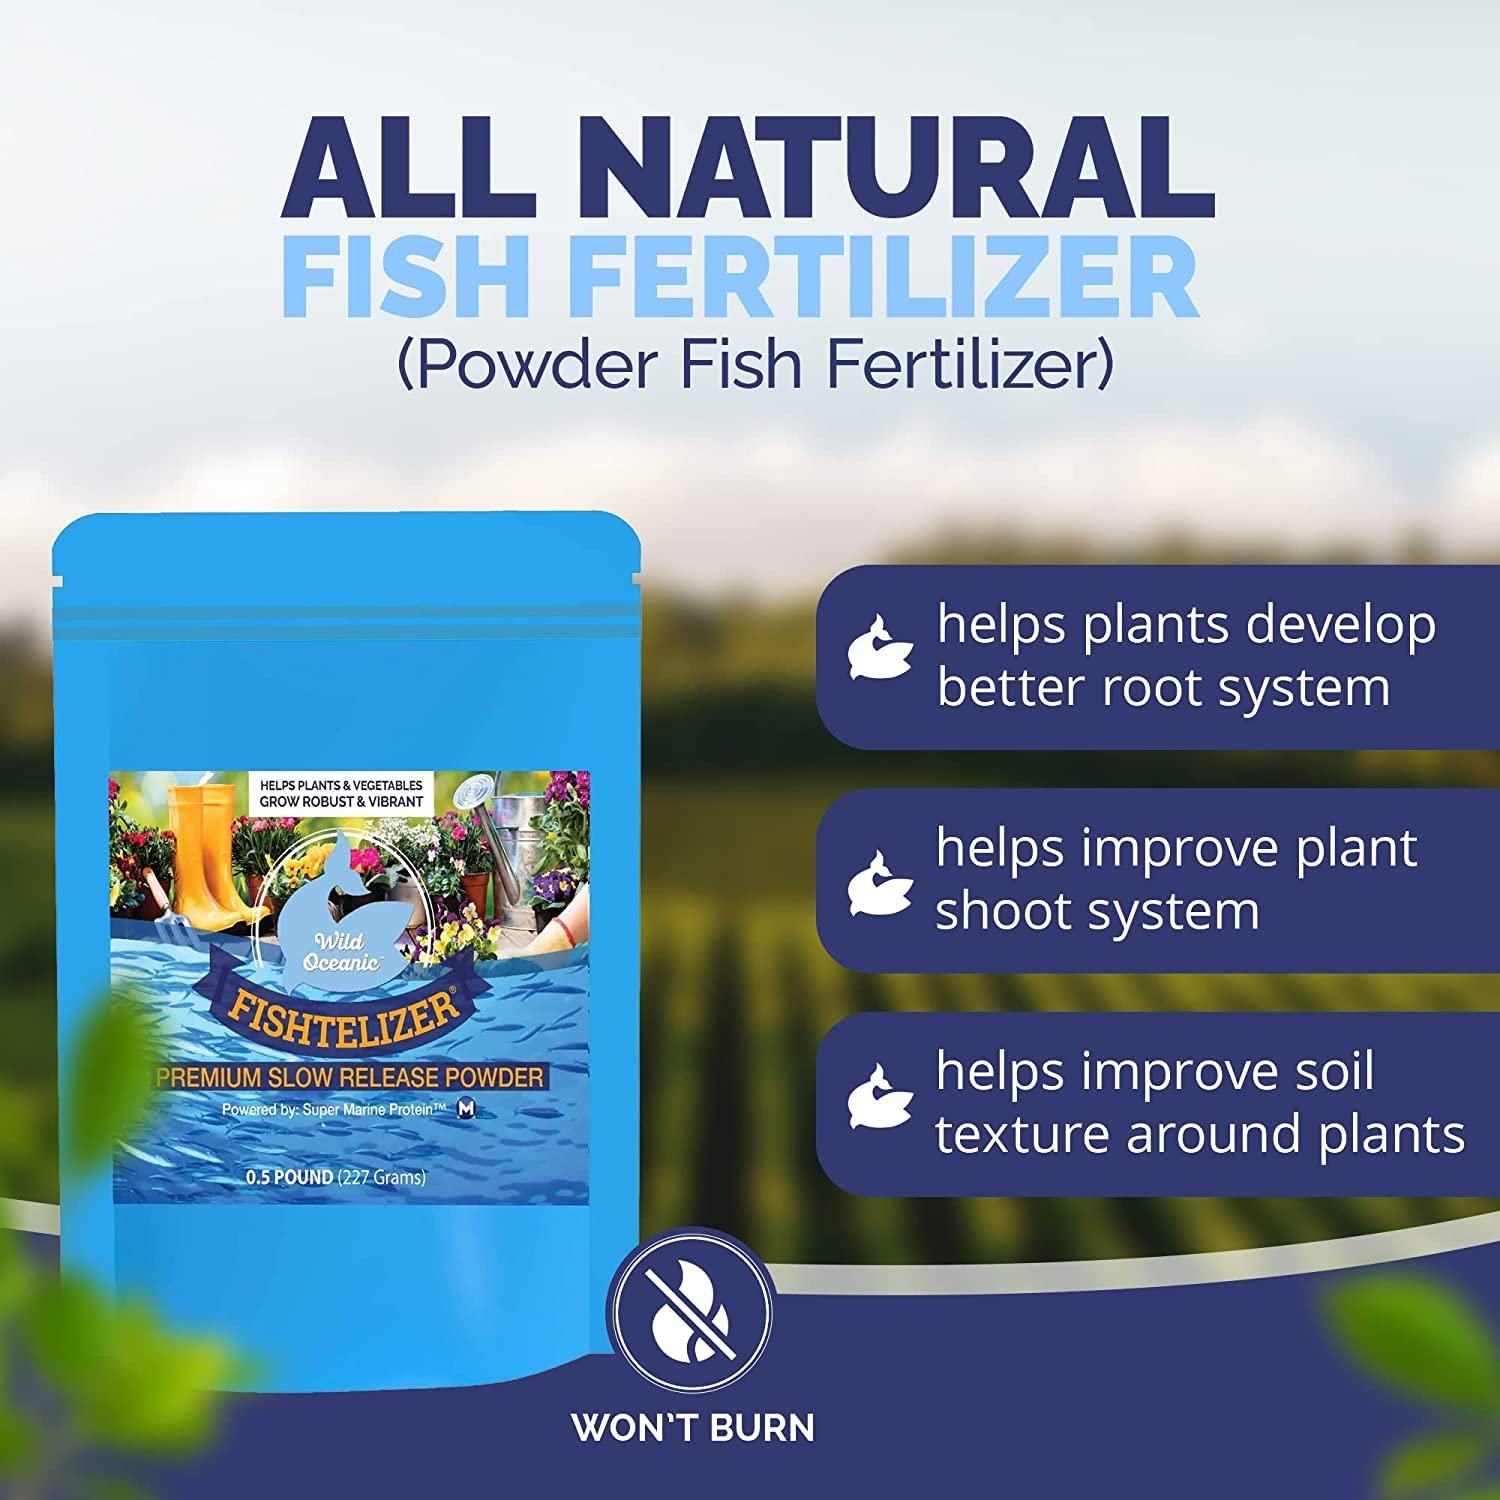 Fishtelizer Slow Release Fertilizer Powdered Organic Fish Fertilizer for Plants Substitute to Regular Garden Fertilizer and Chemical Fertilizer 1 lb